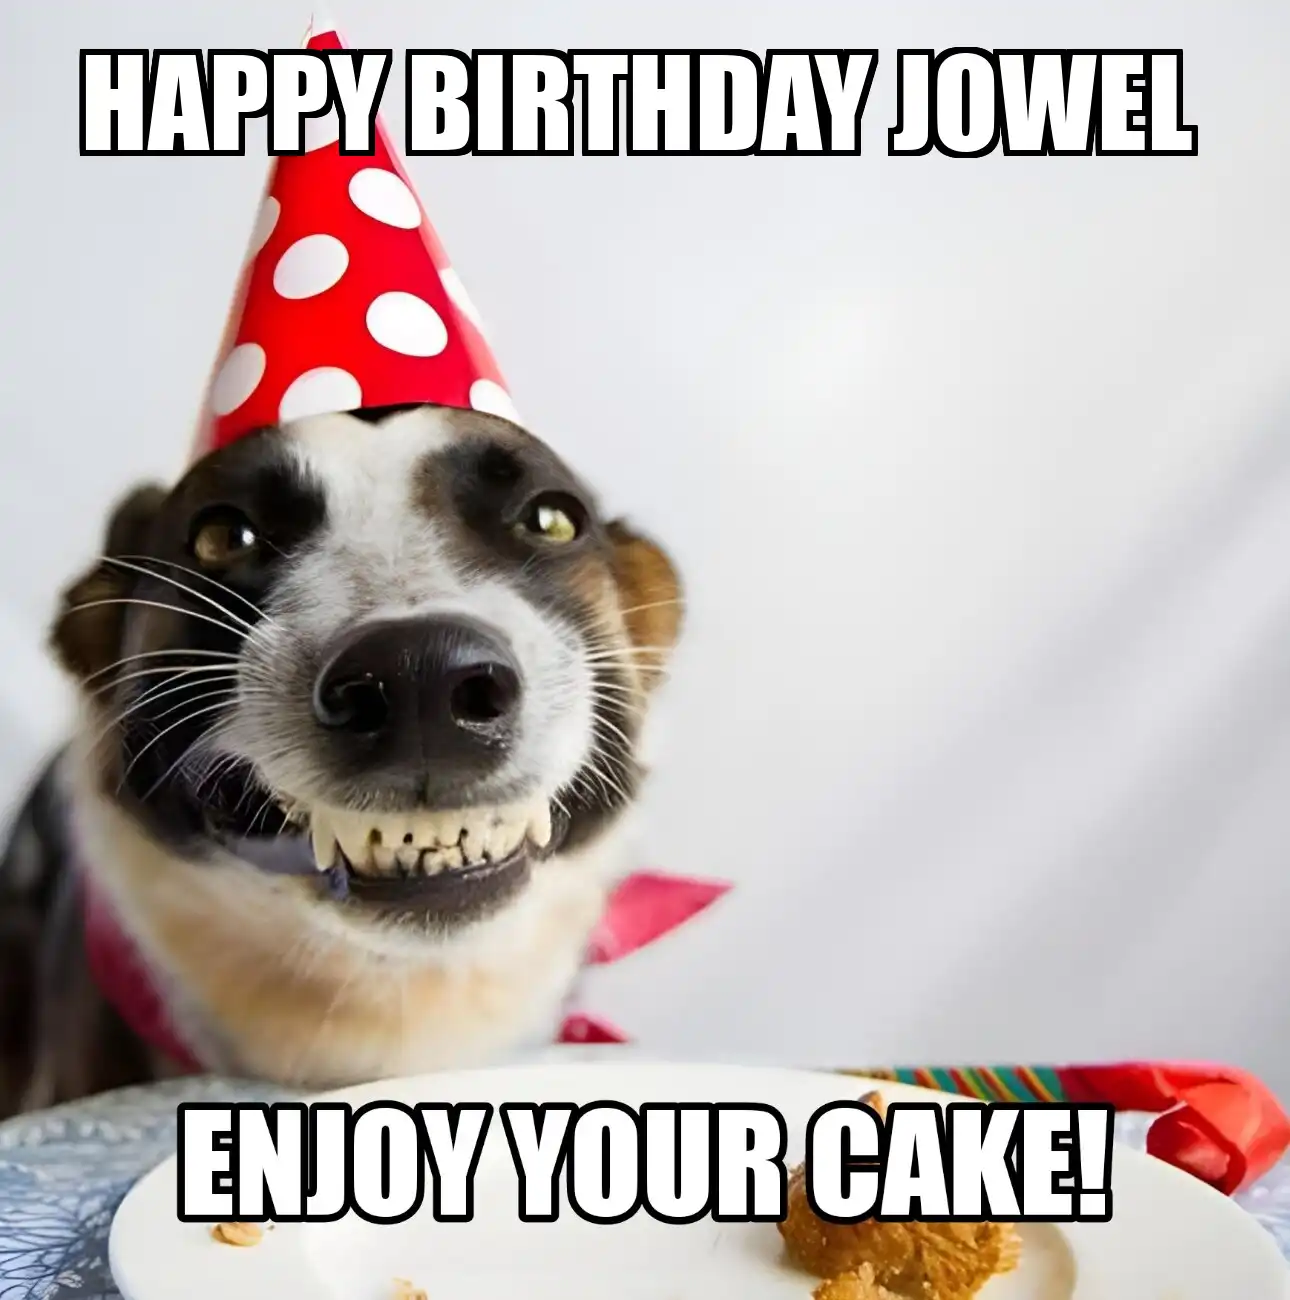 Happy Birthday Jowel Enjoy Your Cake Dog Meme